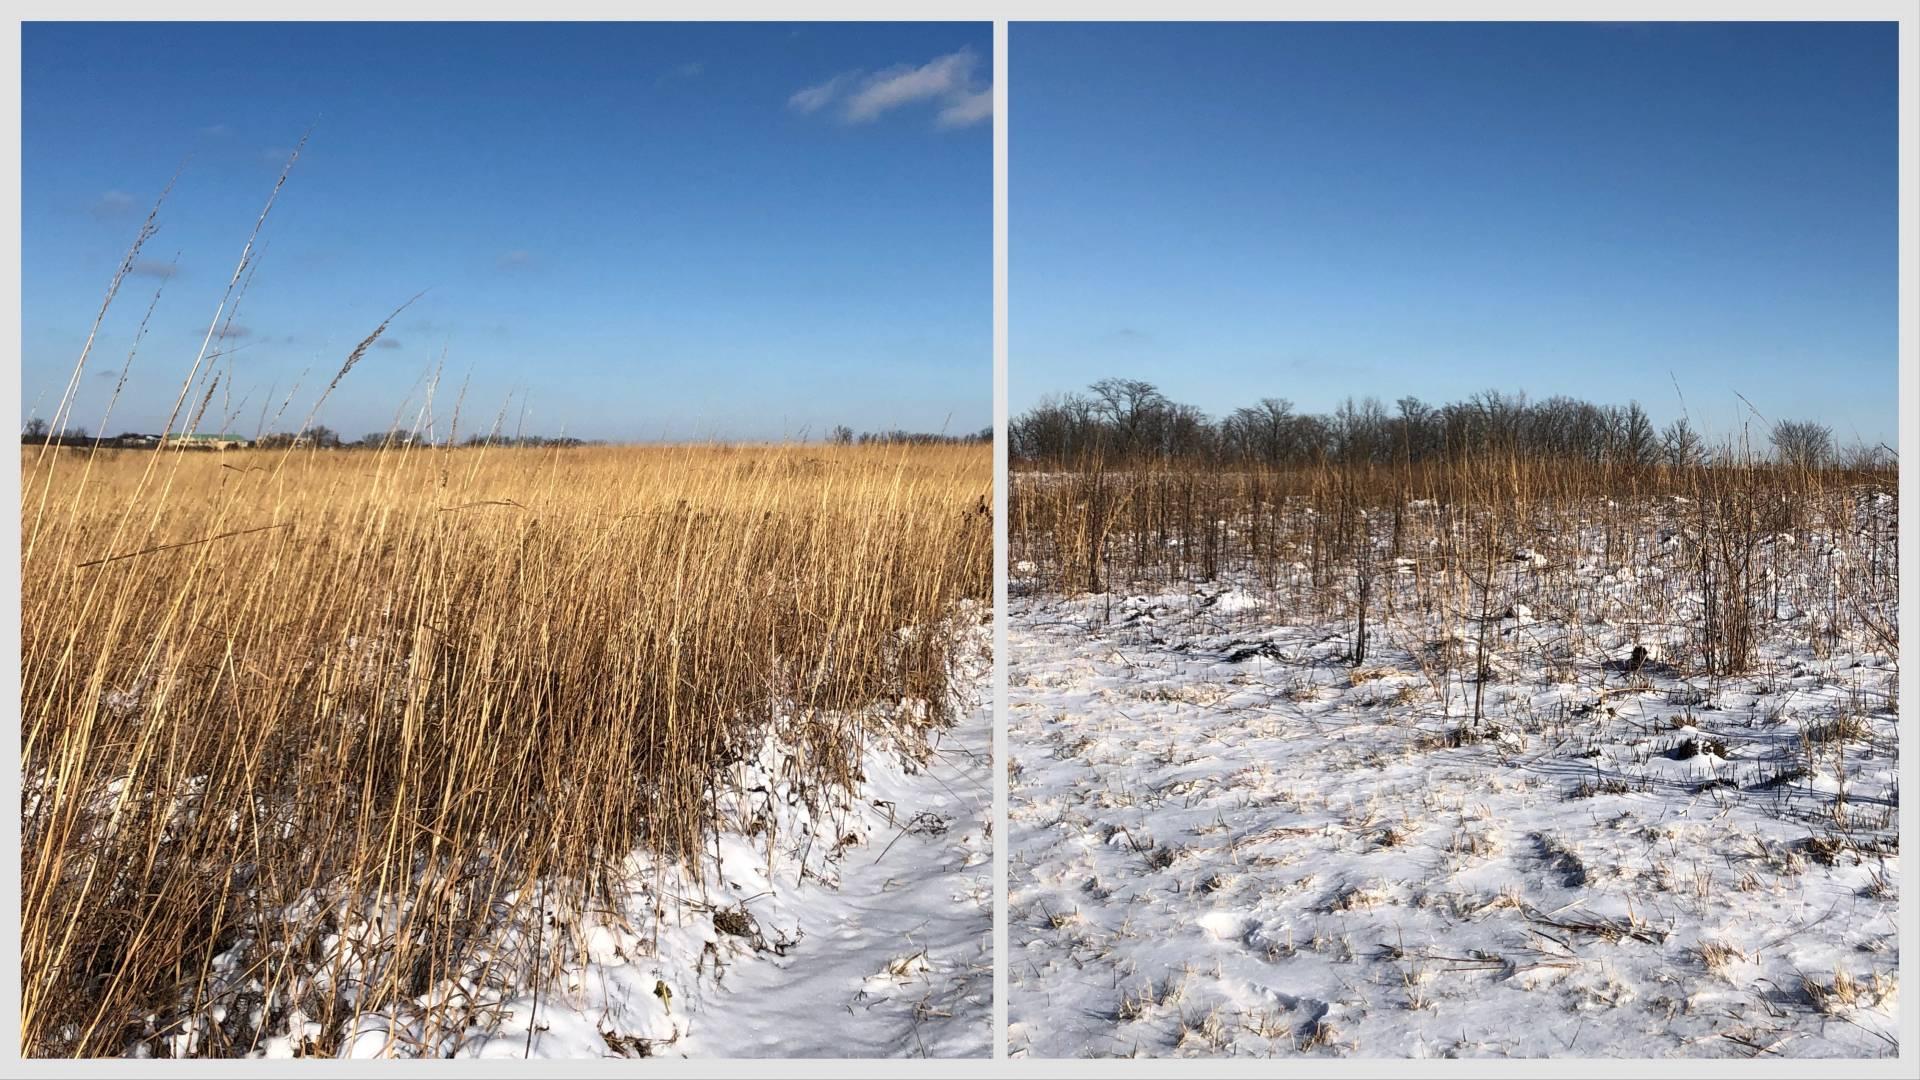 Healthy habitat at Orland Grassland on left, invasive Callery pear shoots on right. (Patty Wetli / WTTW News)